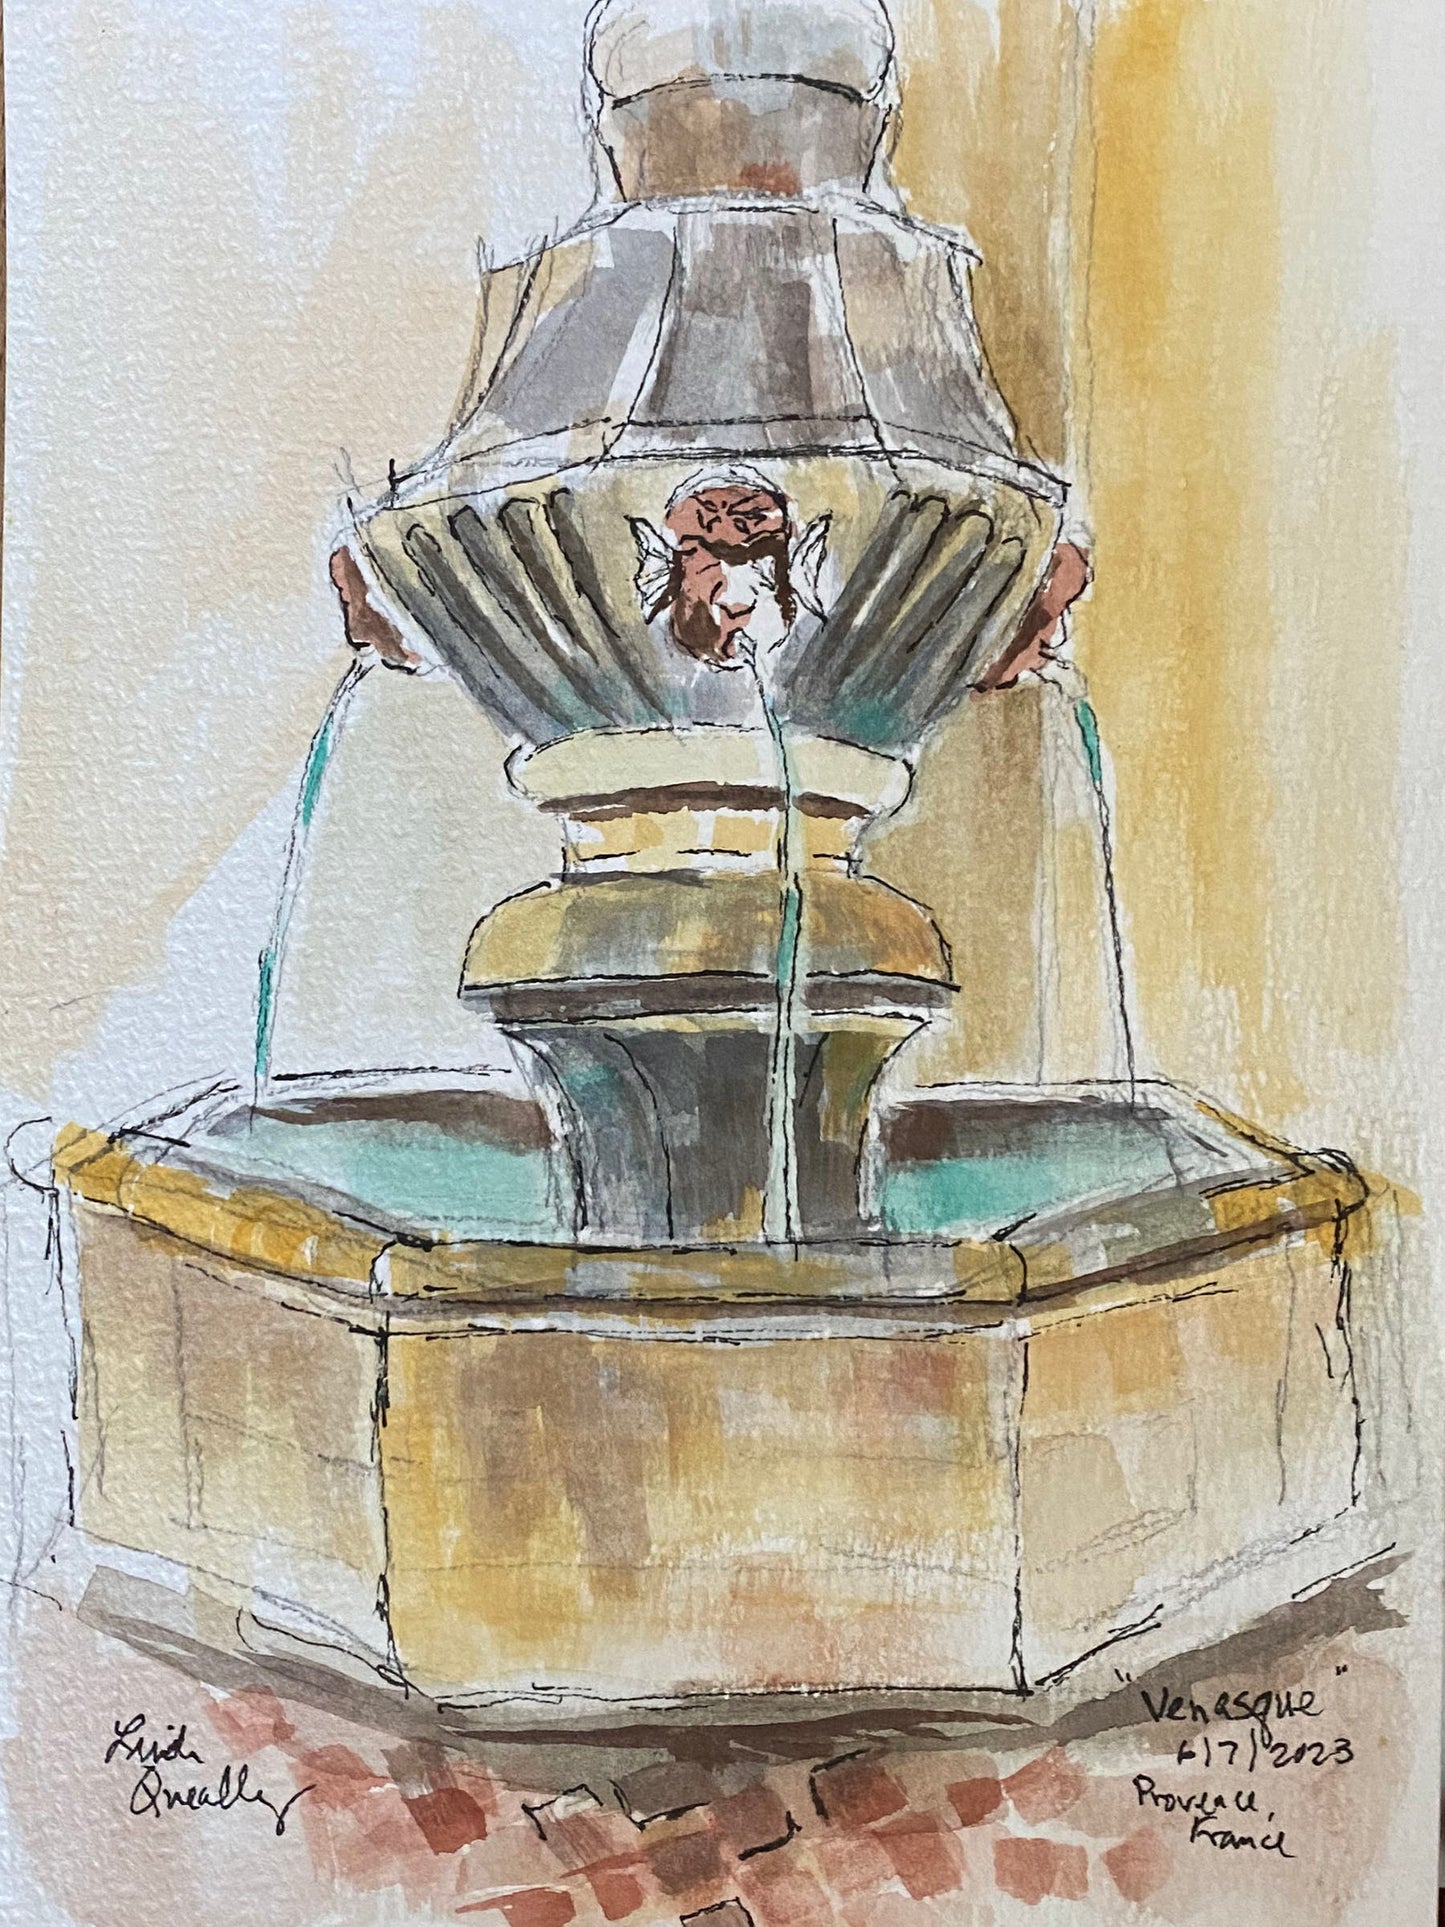 "Venasque Fountain, France" Sketch